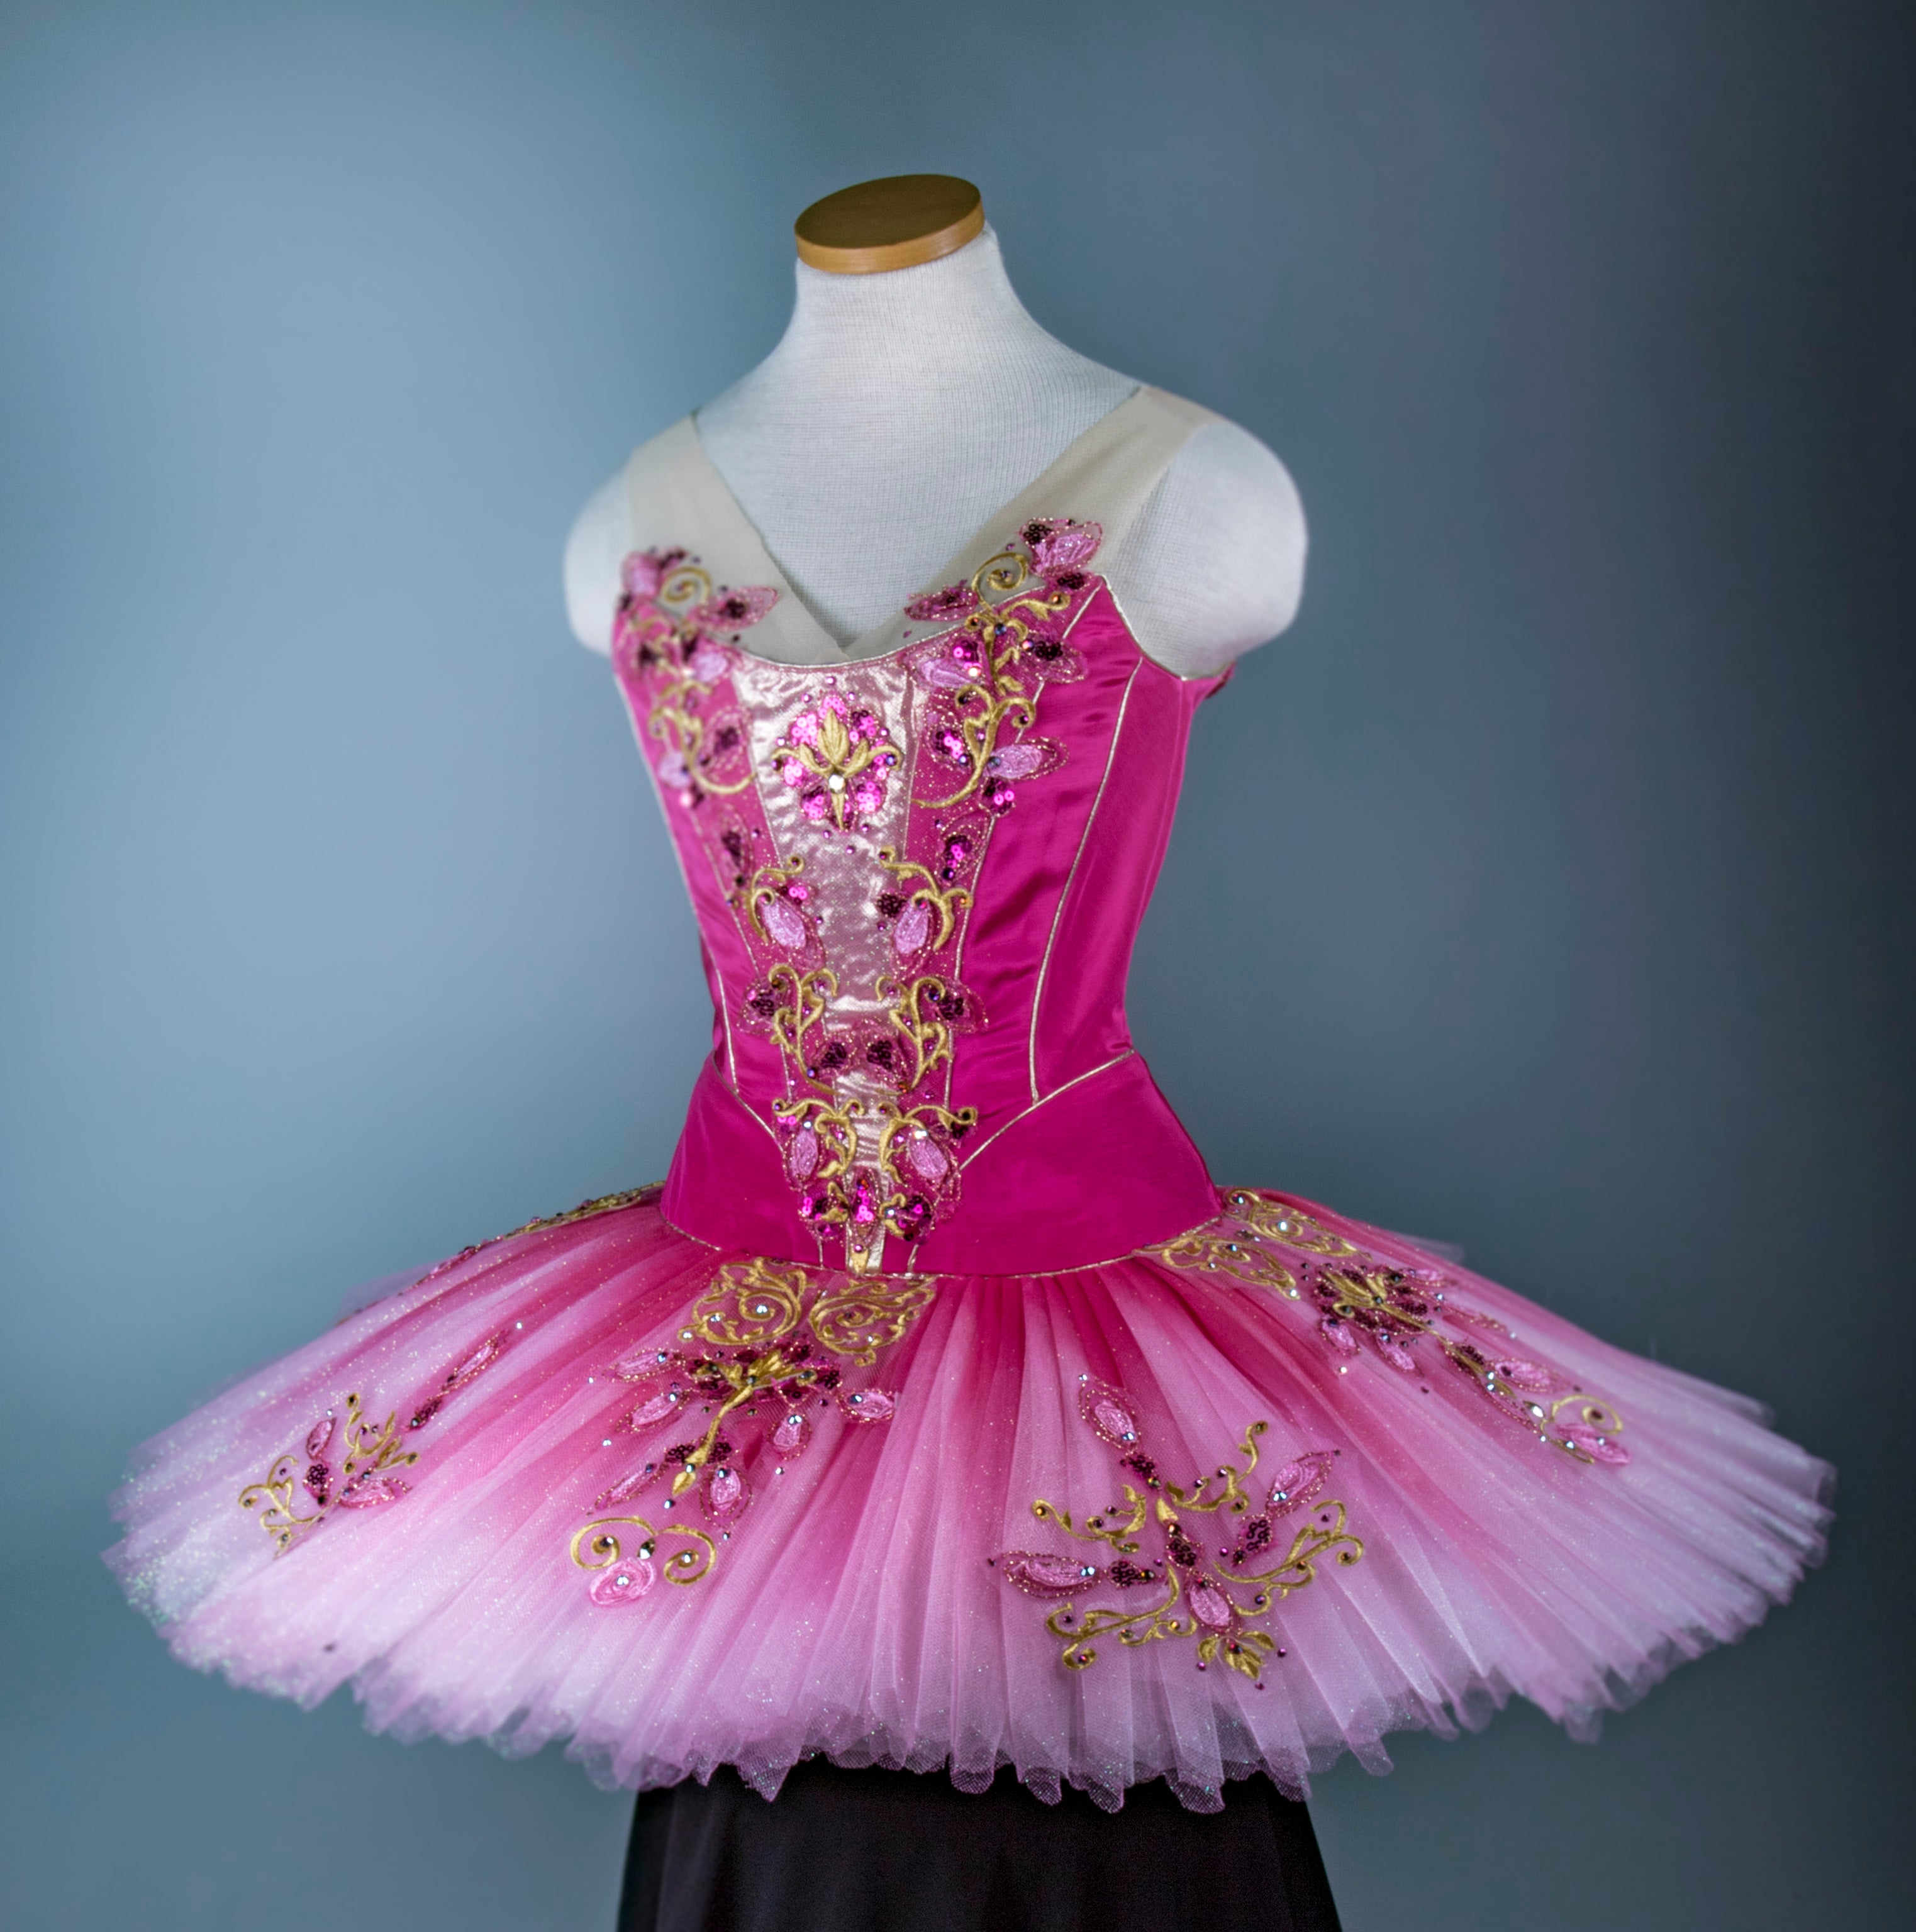 Regal Sugar Plum Fairy - Dancewear by Patricia